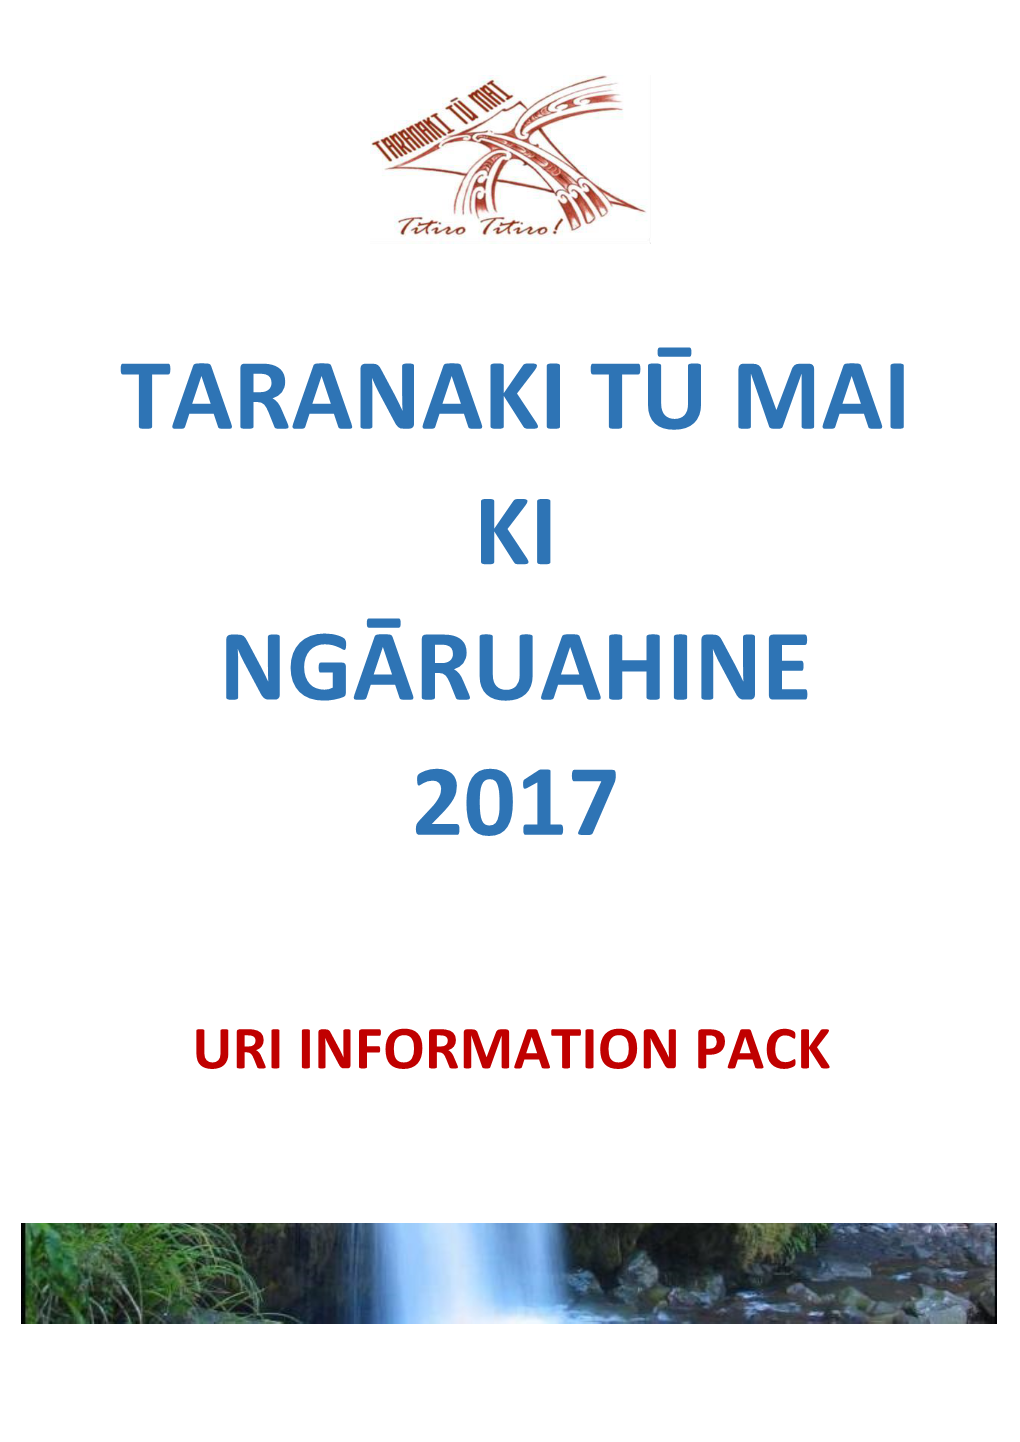 Kapa Haka Information Sheets